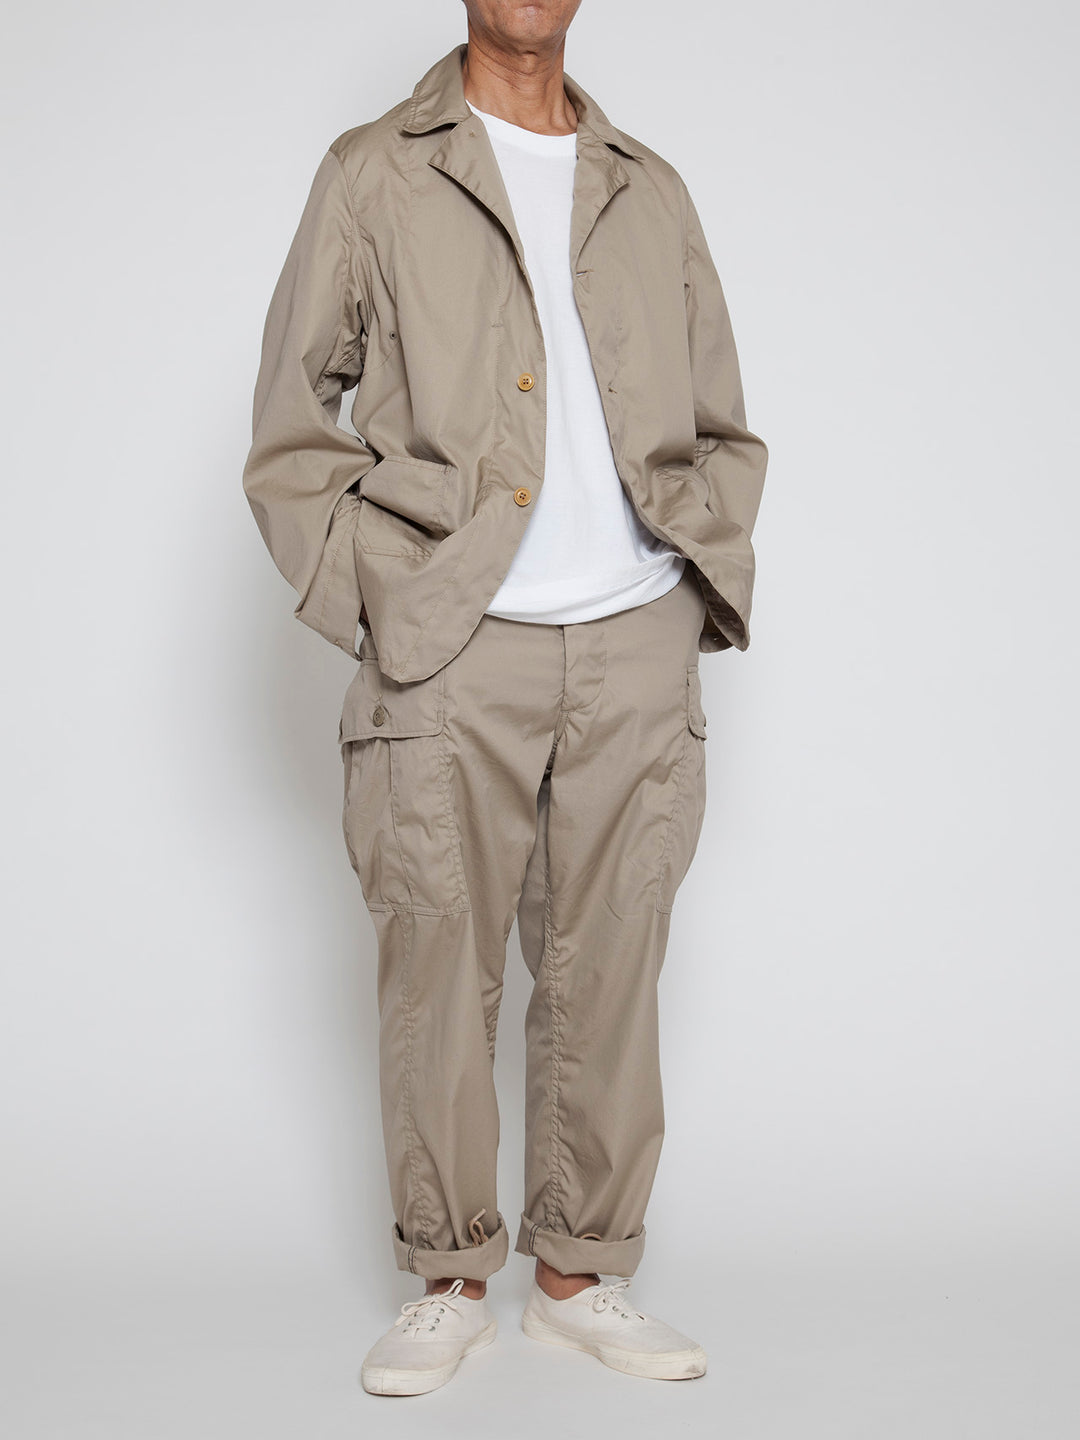 Jacket Style x Military Fatigue Pants